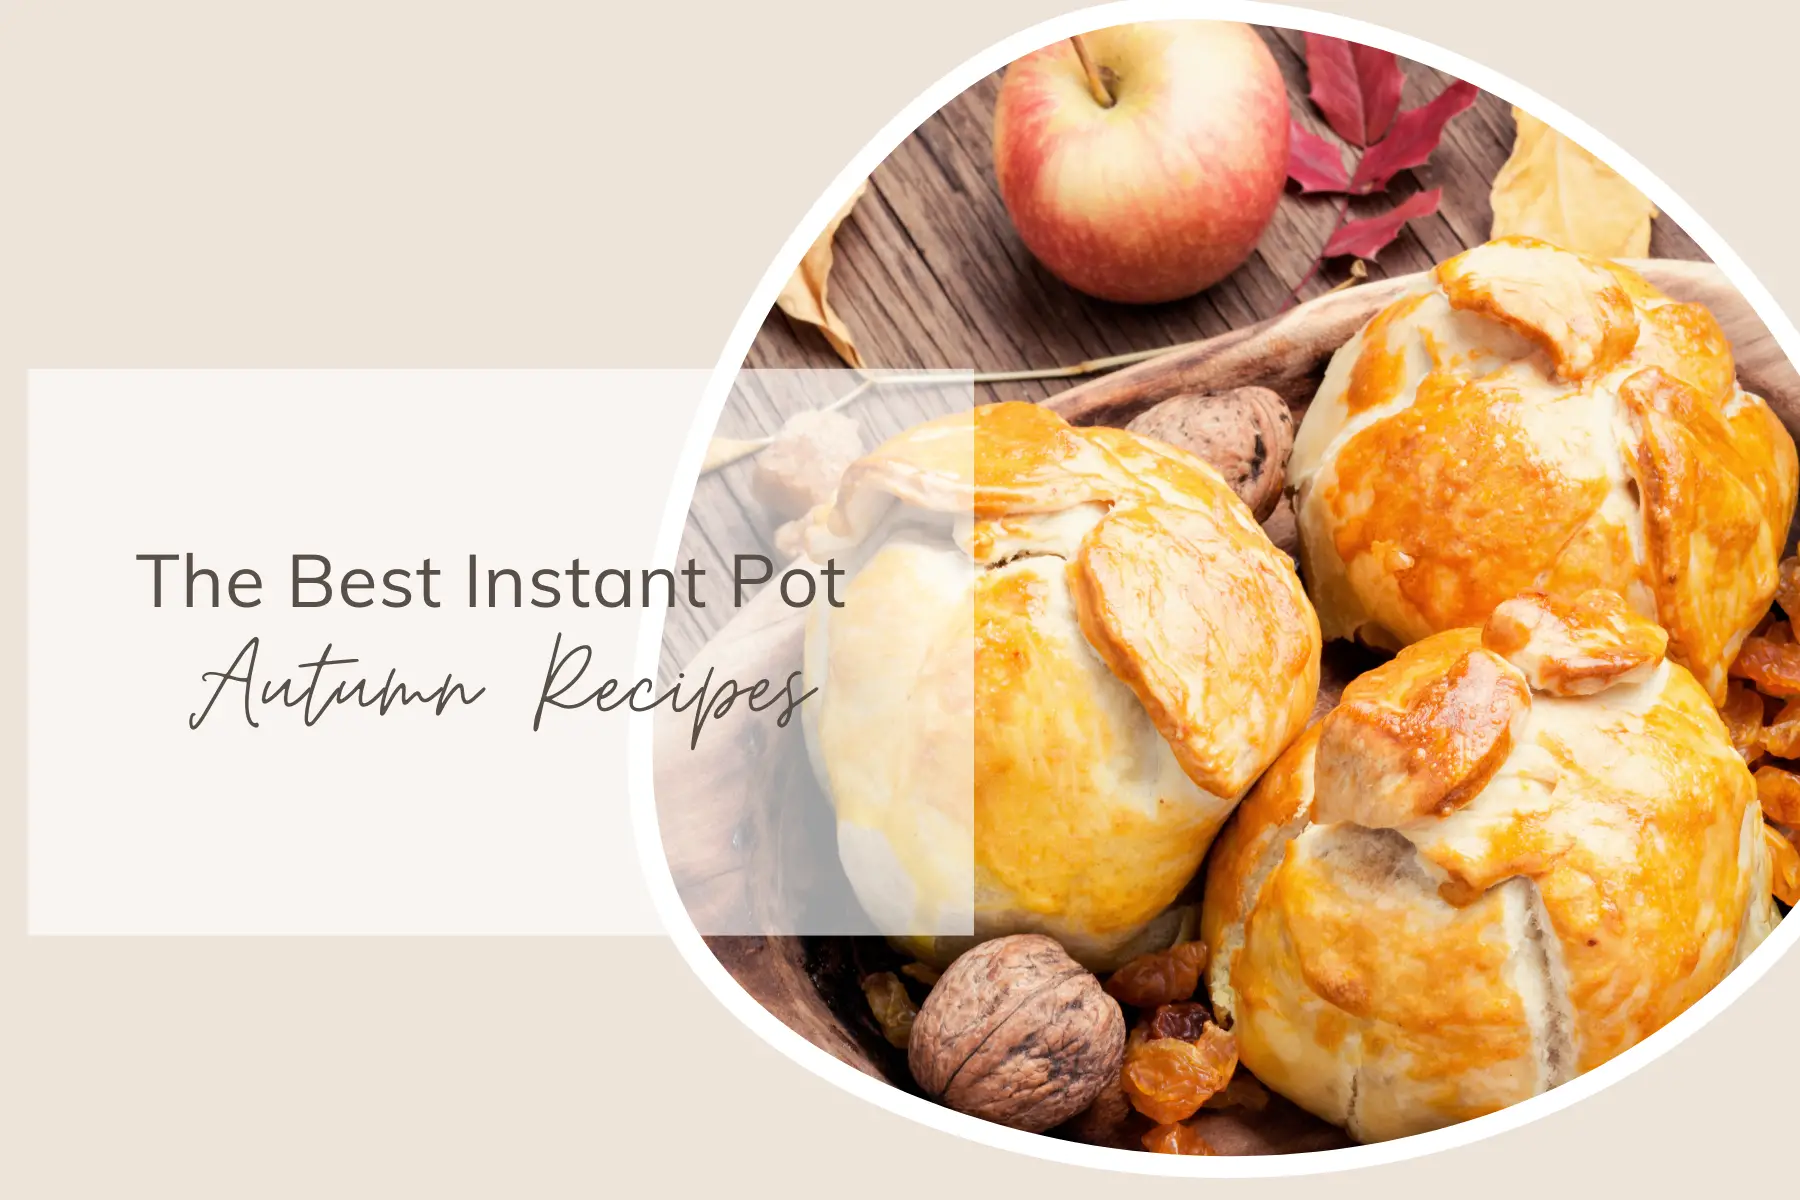 The Best Instant Pot Autumn Recipes